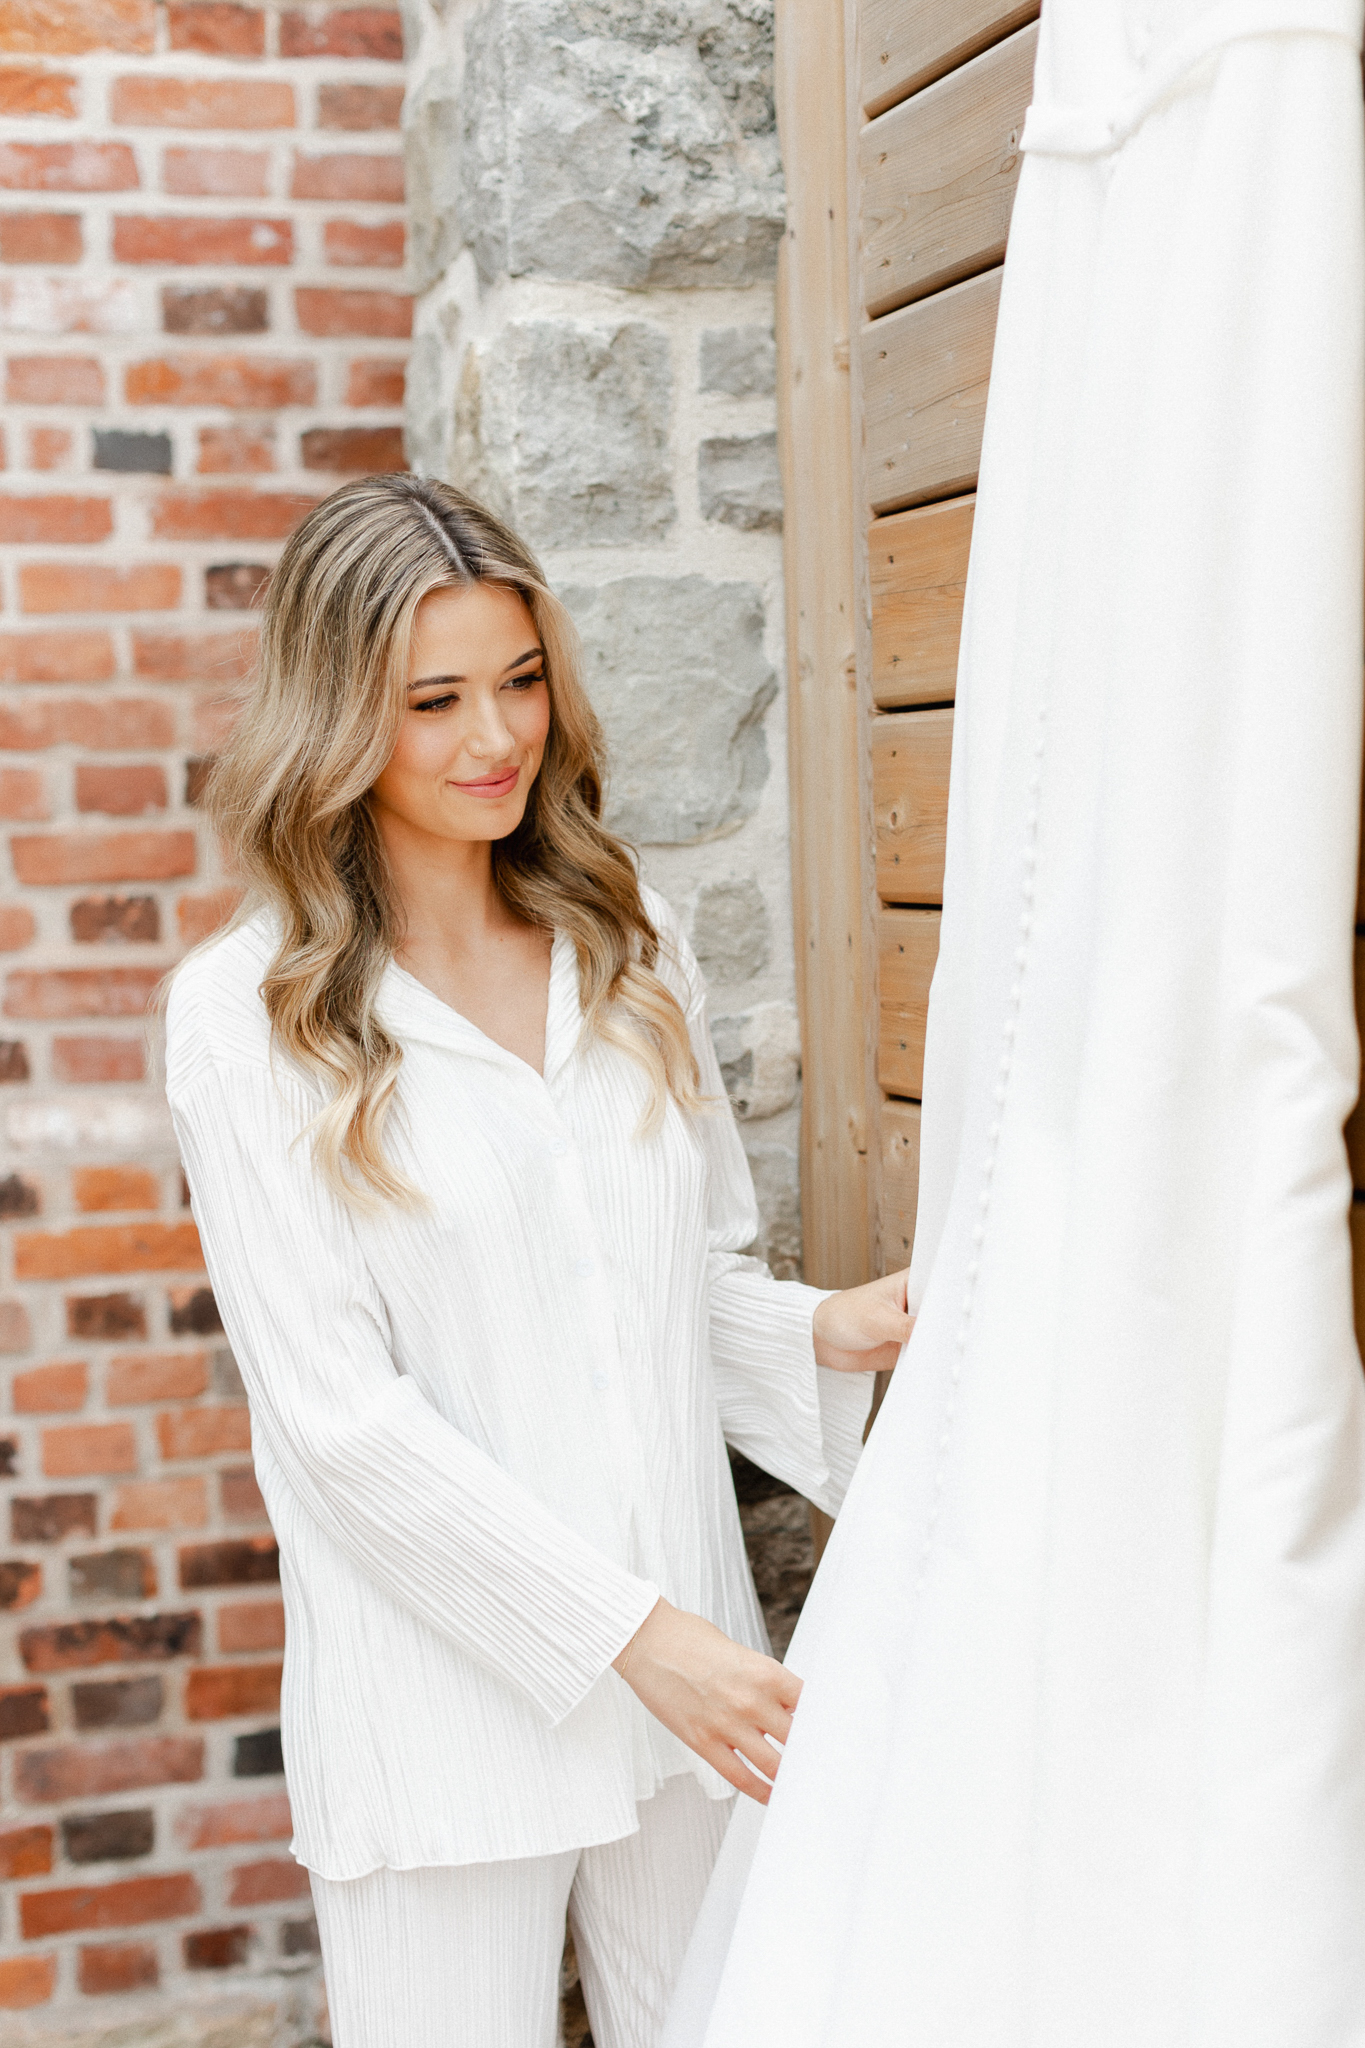 A bride in white pajamas gazes at her wedding dress.